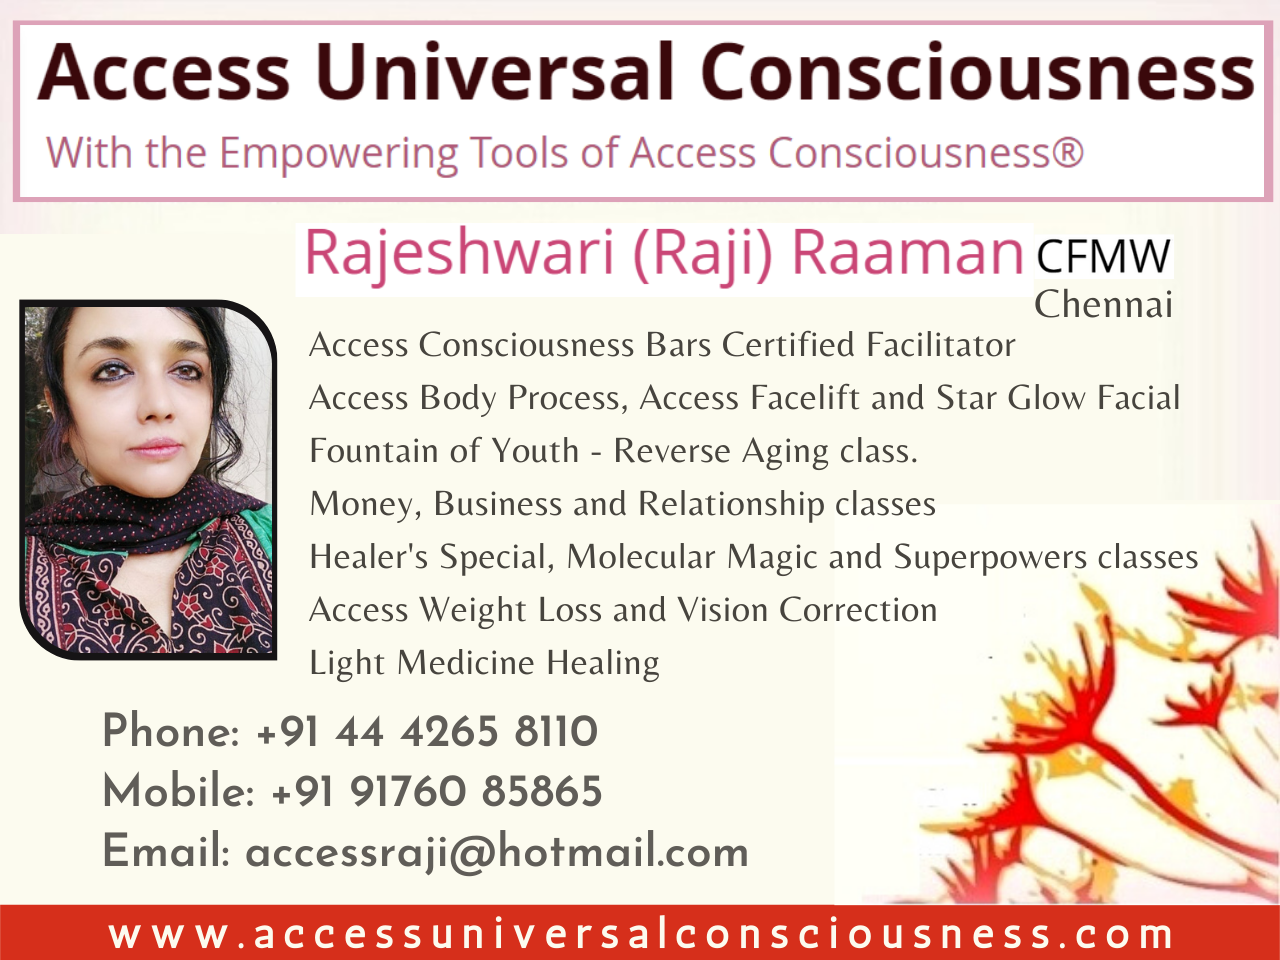 Raji Raaman, Access Consciousness bars and body process Facilitator - Pondicherry